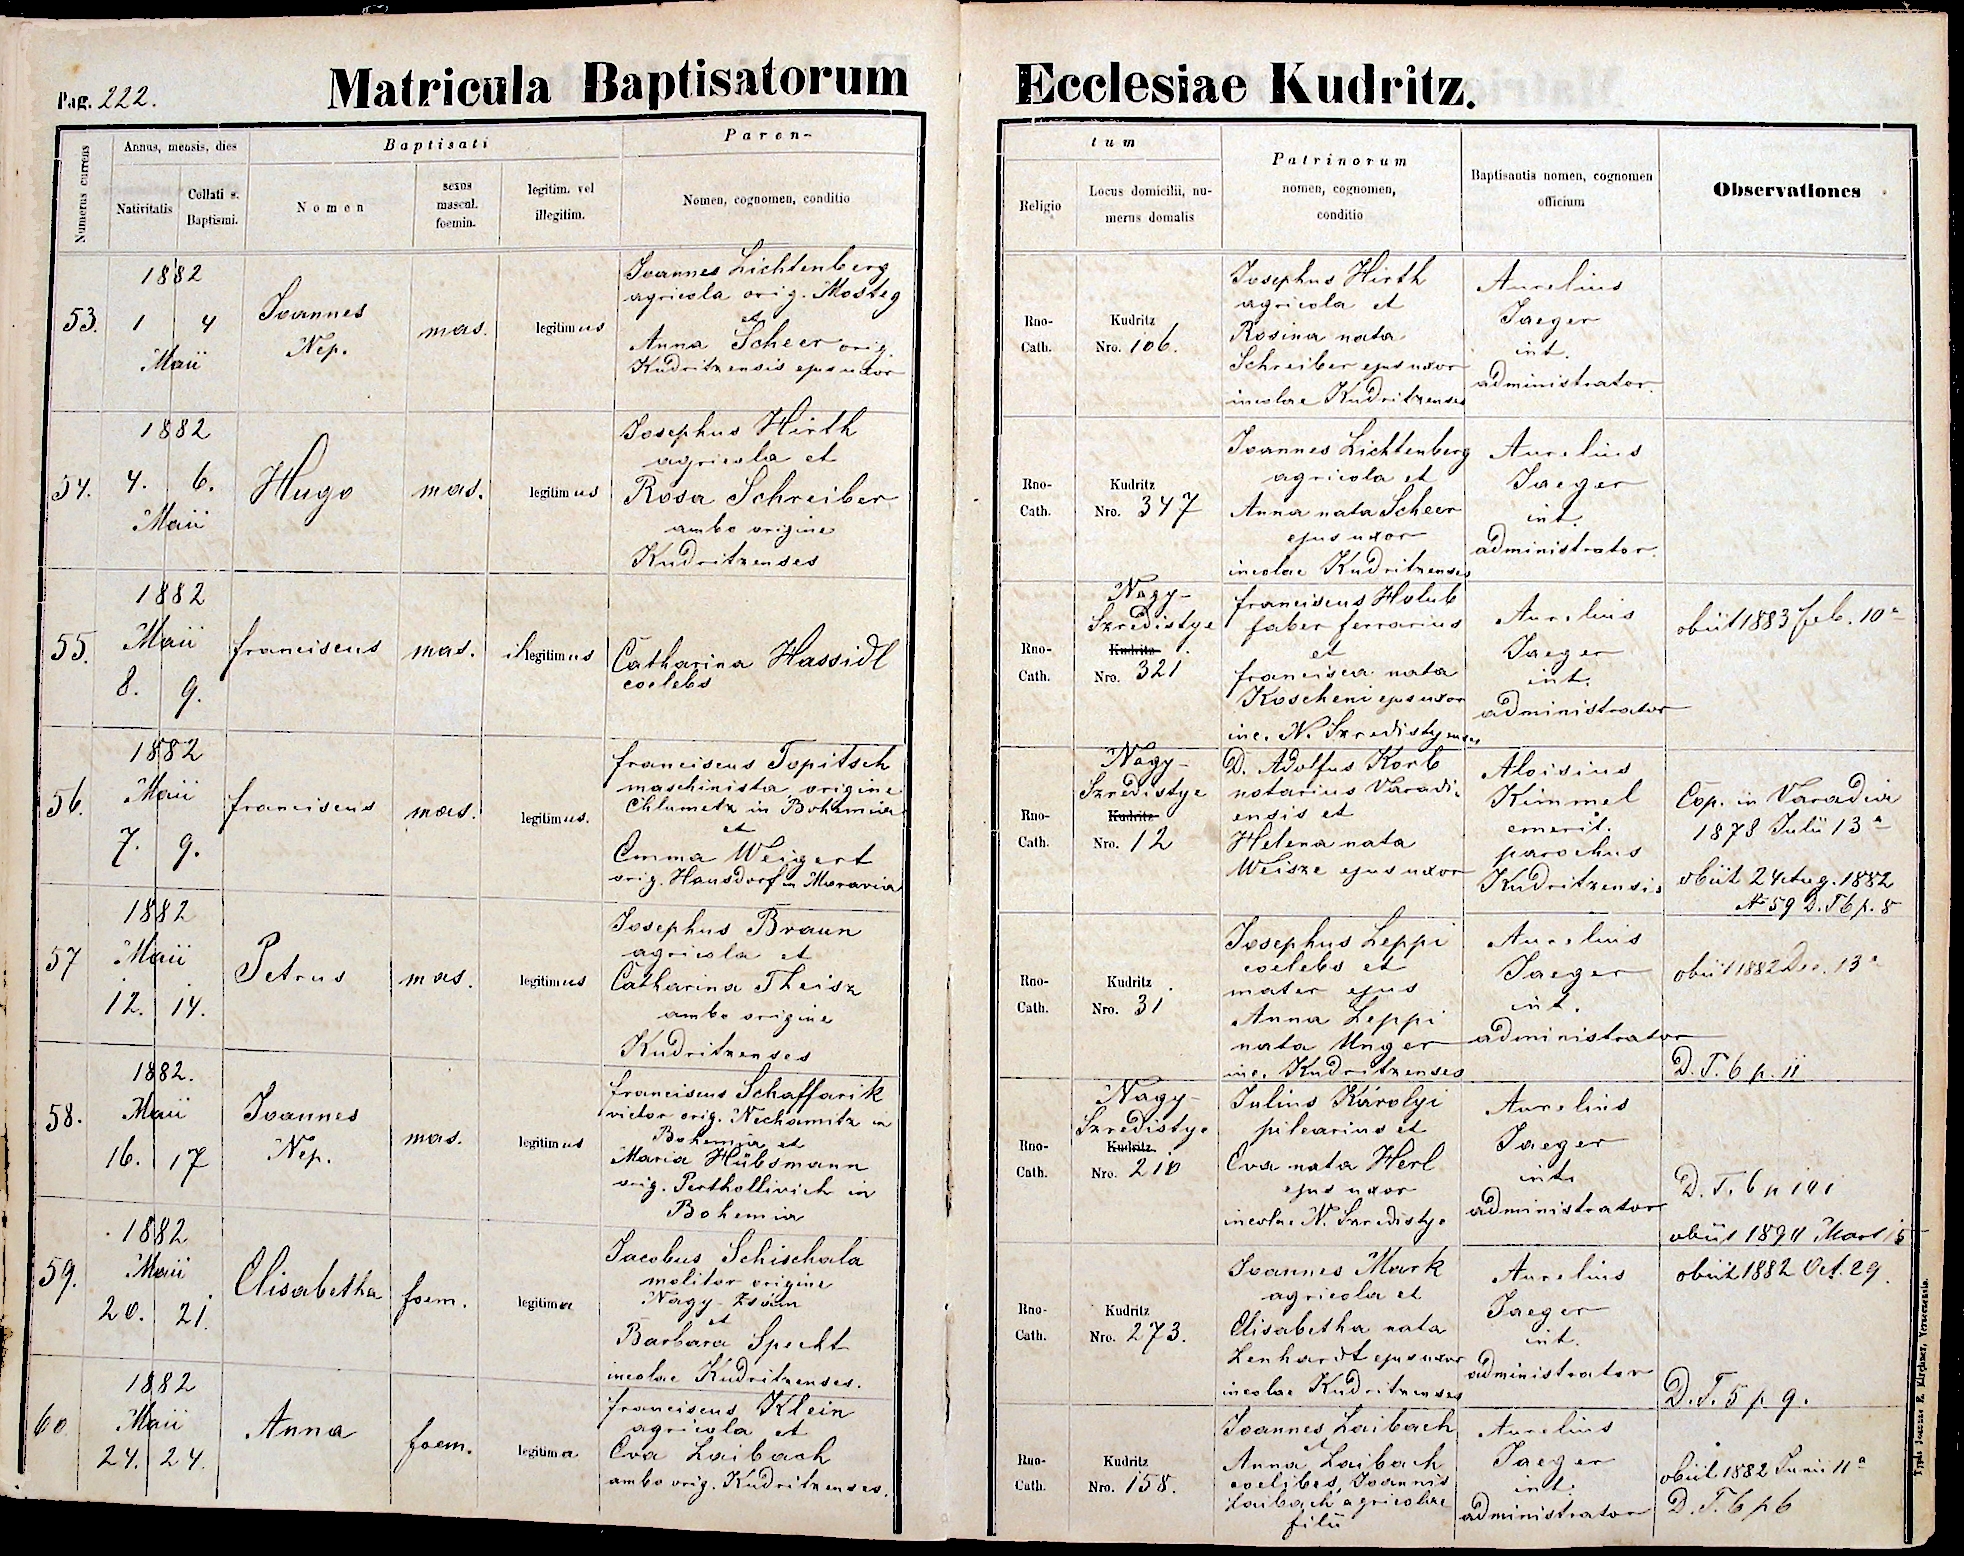 images/church_records/BIRTHS/1884-1899B/1899/222